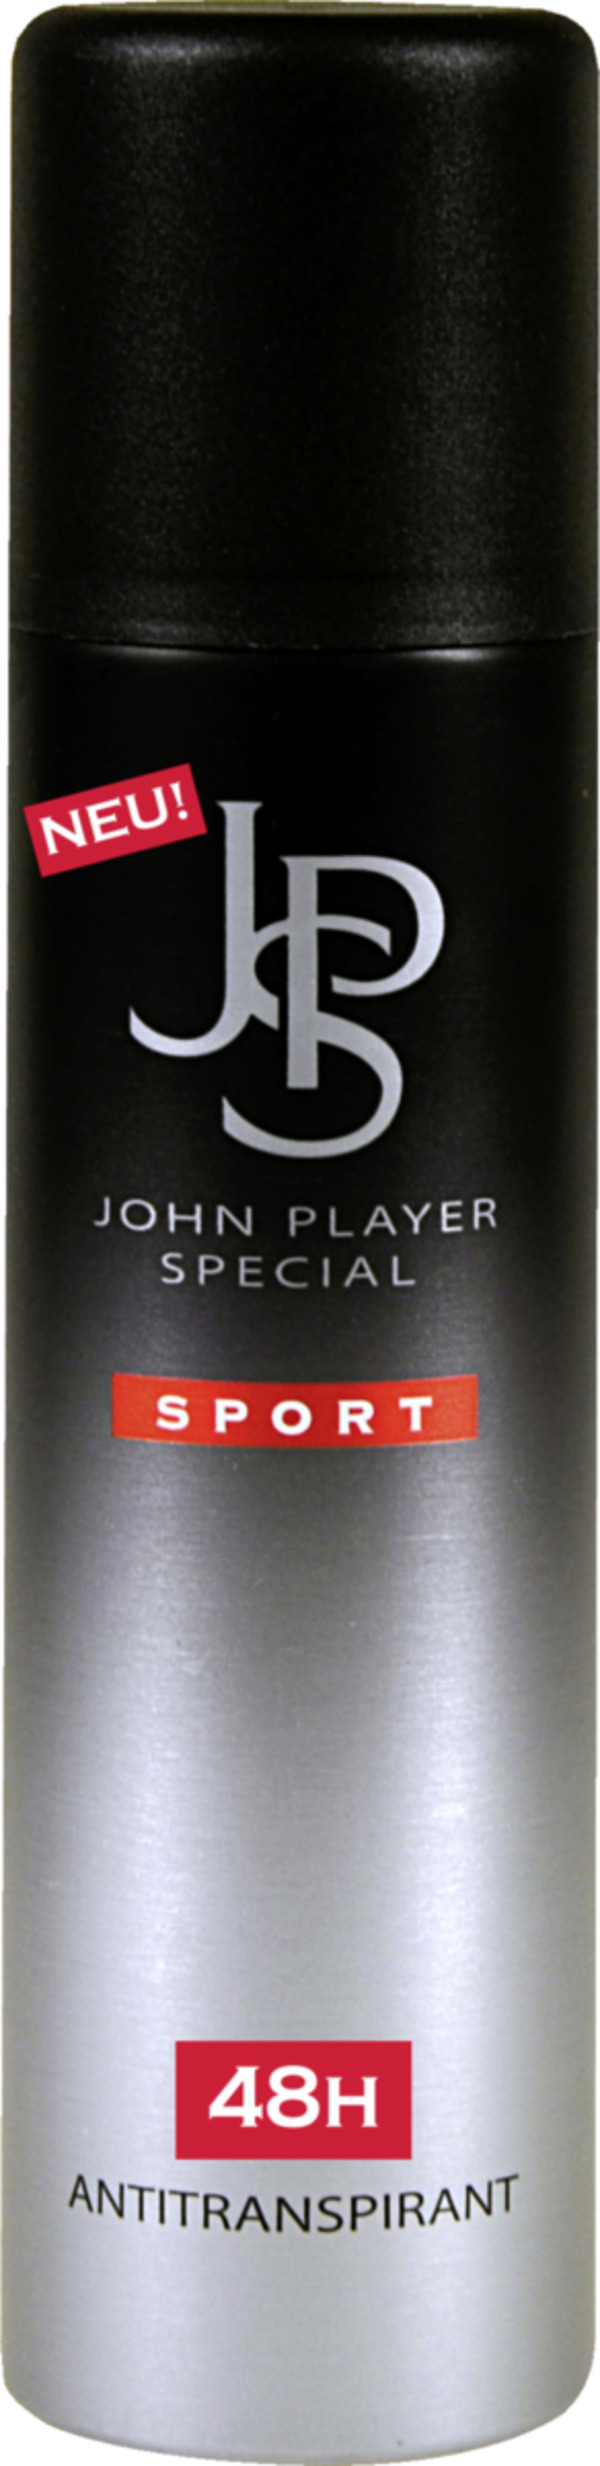 Bild 1 von John Player Special Sport Anti-Transpirant Spray